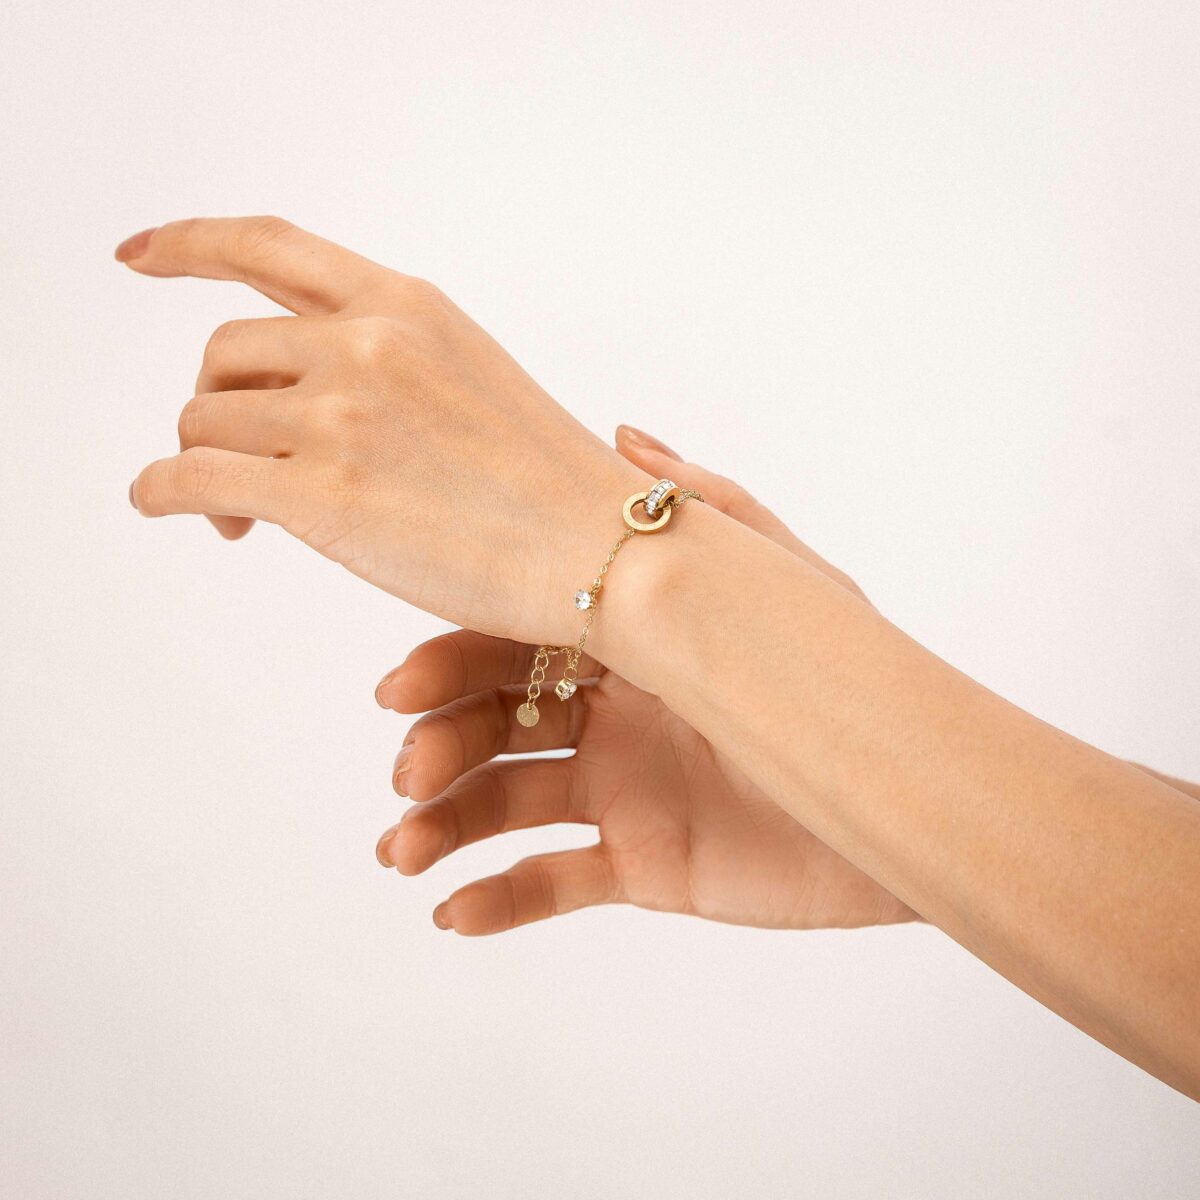 https://m.clubbella.co/product/celine-bracelet-18k-gold-plated/ CELINE 18K GP BRACELET (7)